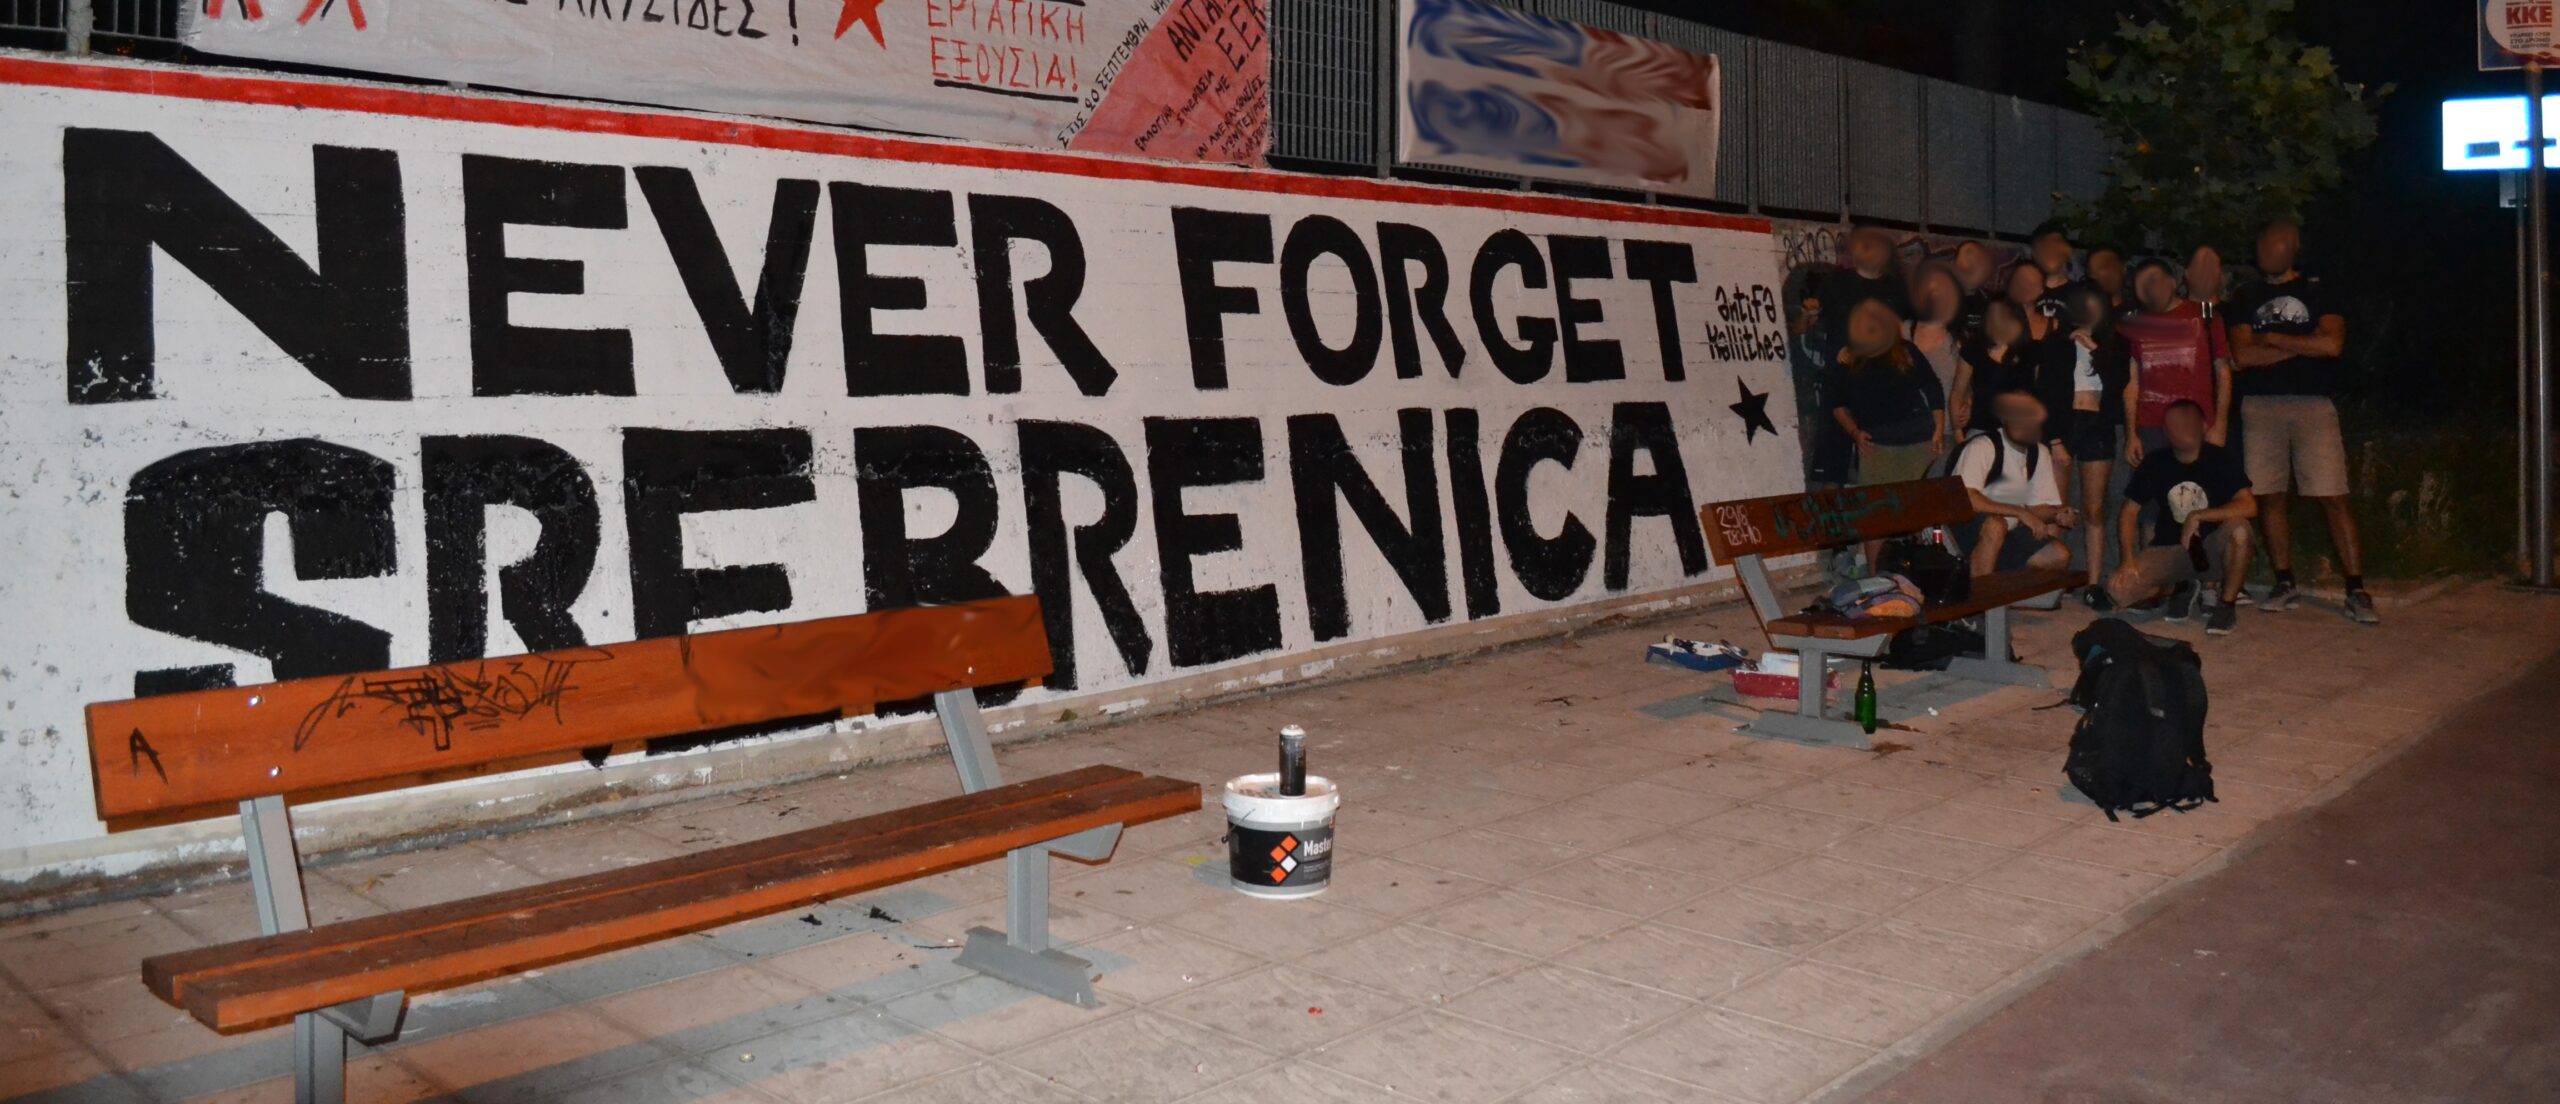 antifa kallithea never forget srebrenica graffiti petralona